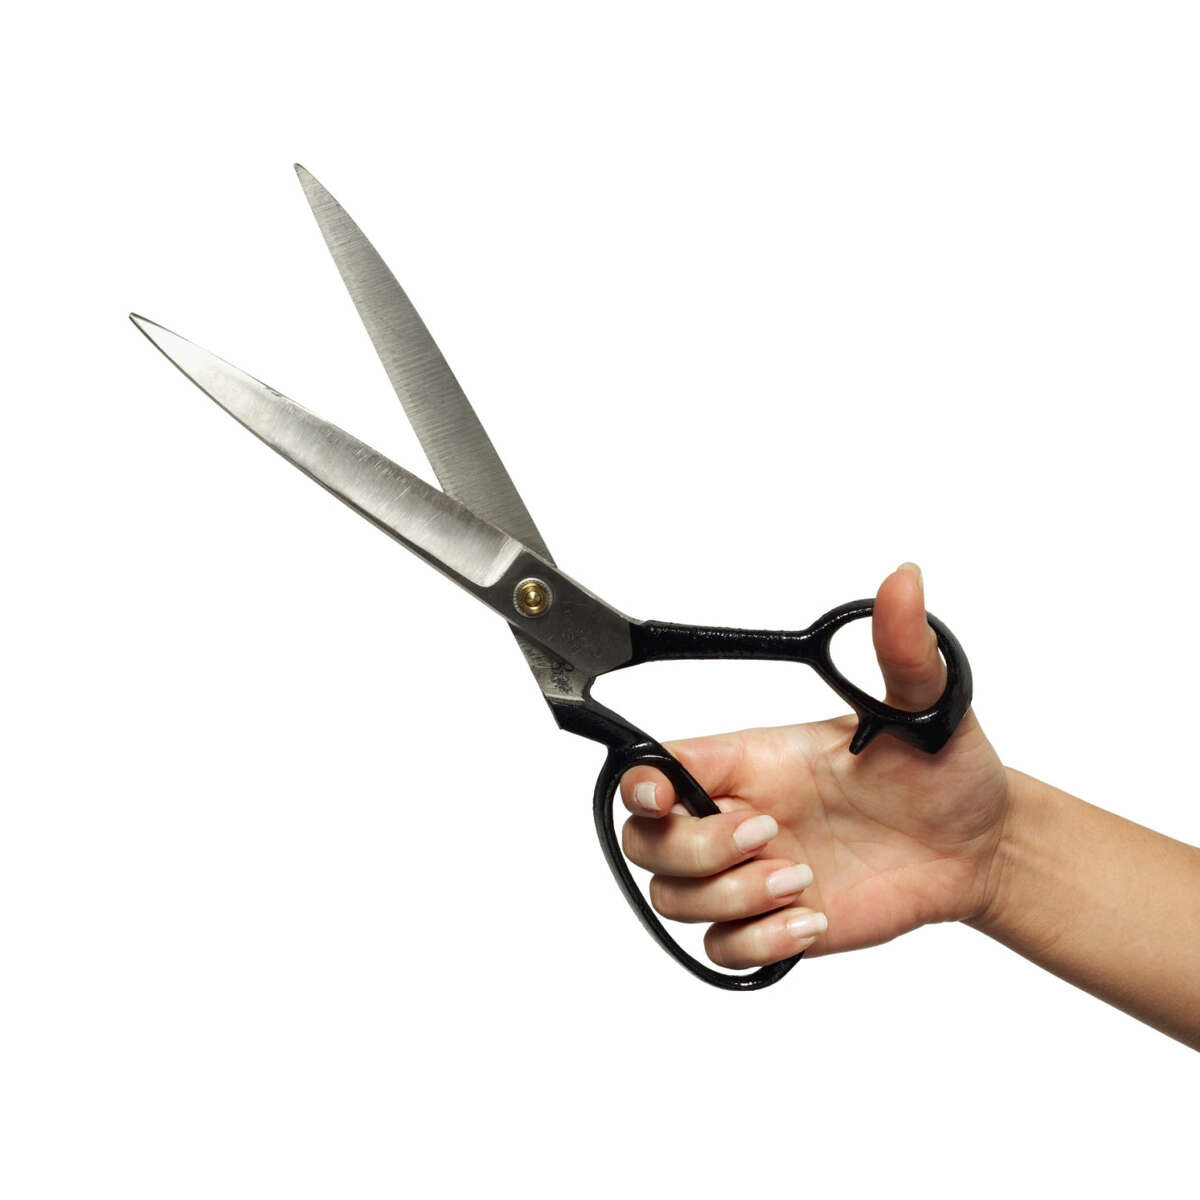 Close-up of hand holding scissors